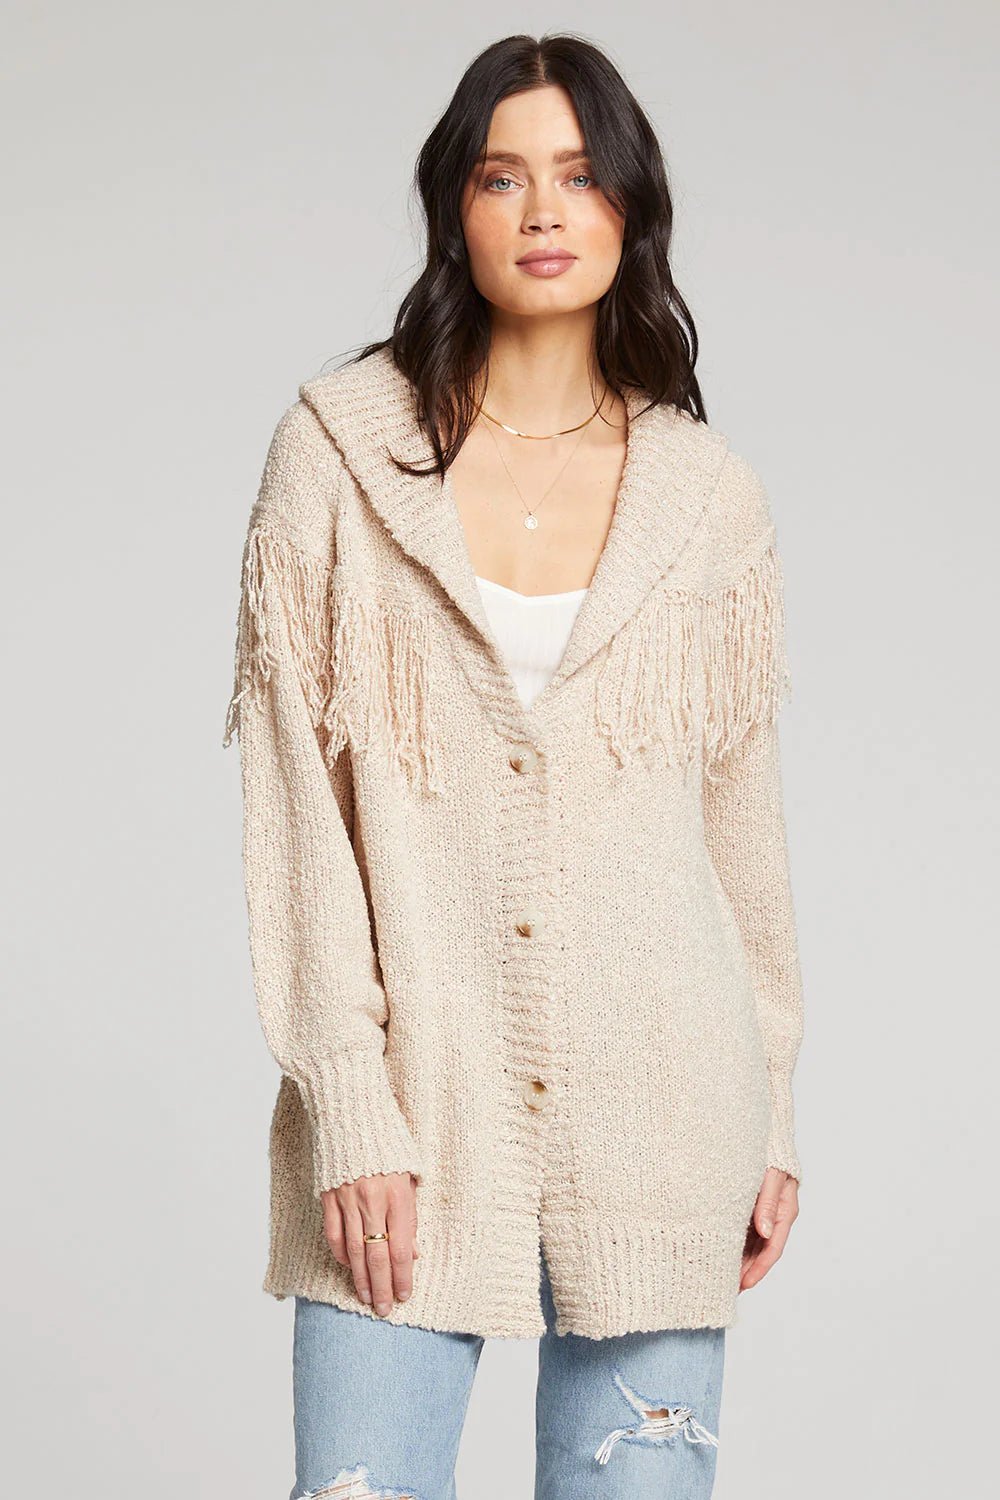 Saltwater Luxe Aura Sweater in Natural - Estilo Boutique